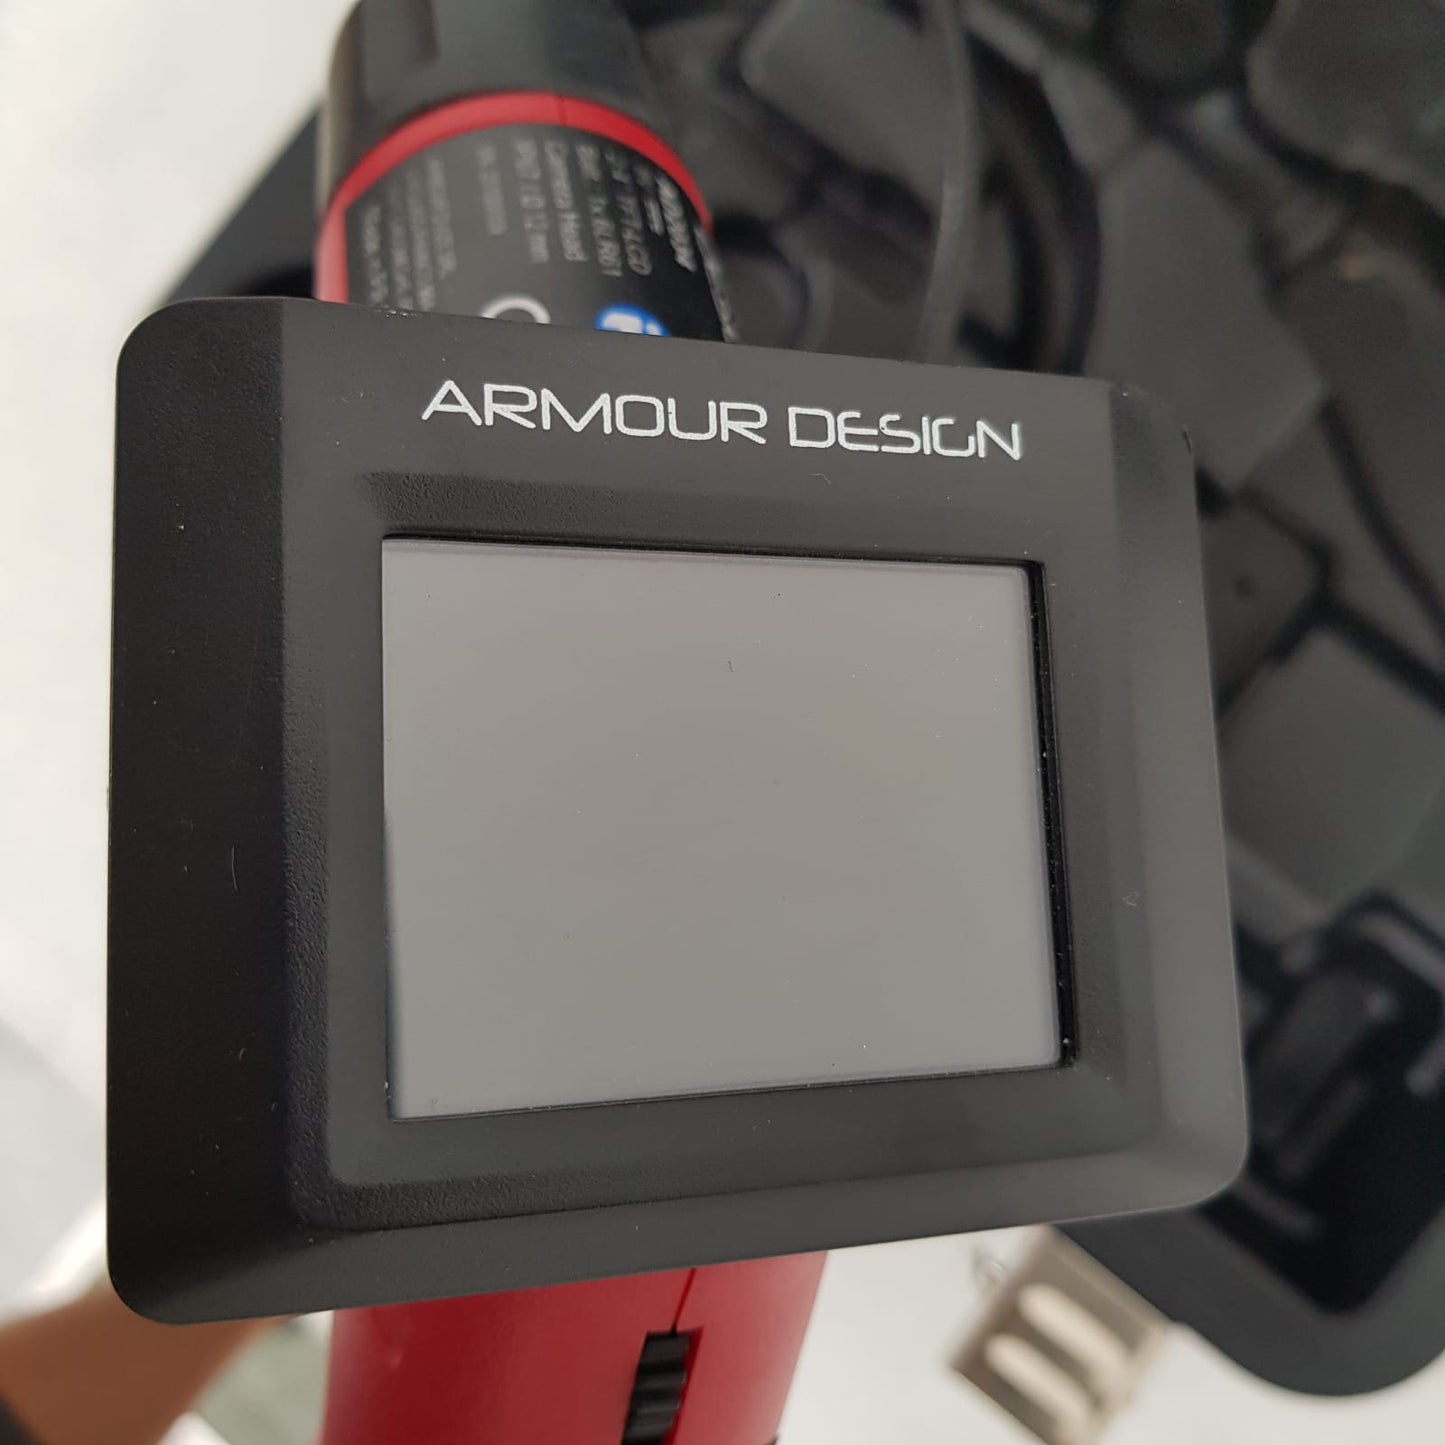 Armour Design AD2034 video endoscopio